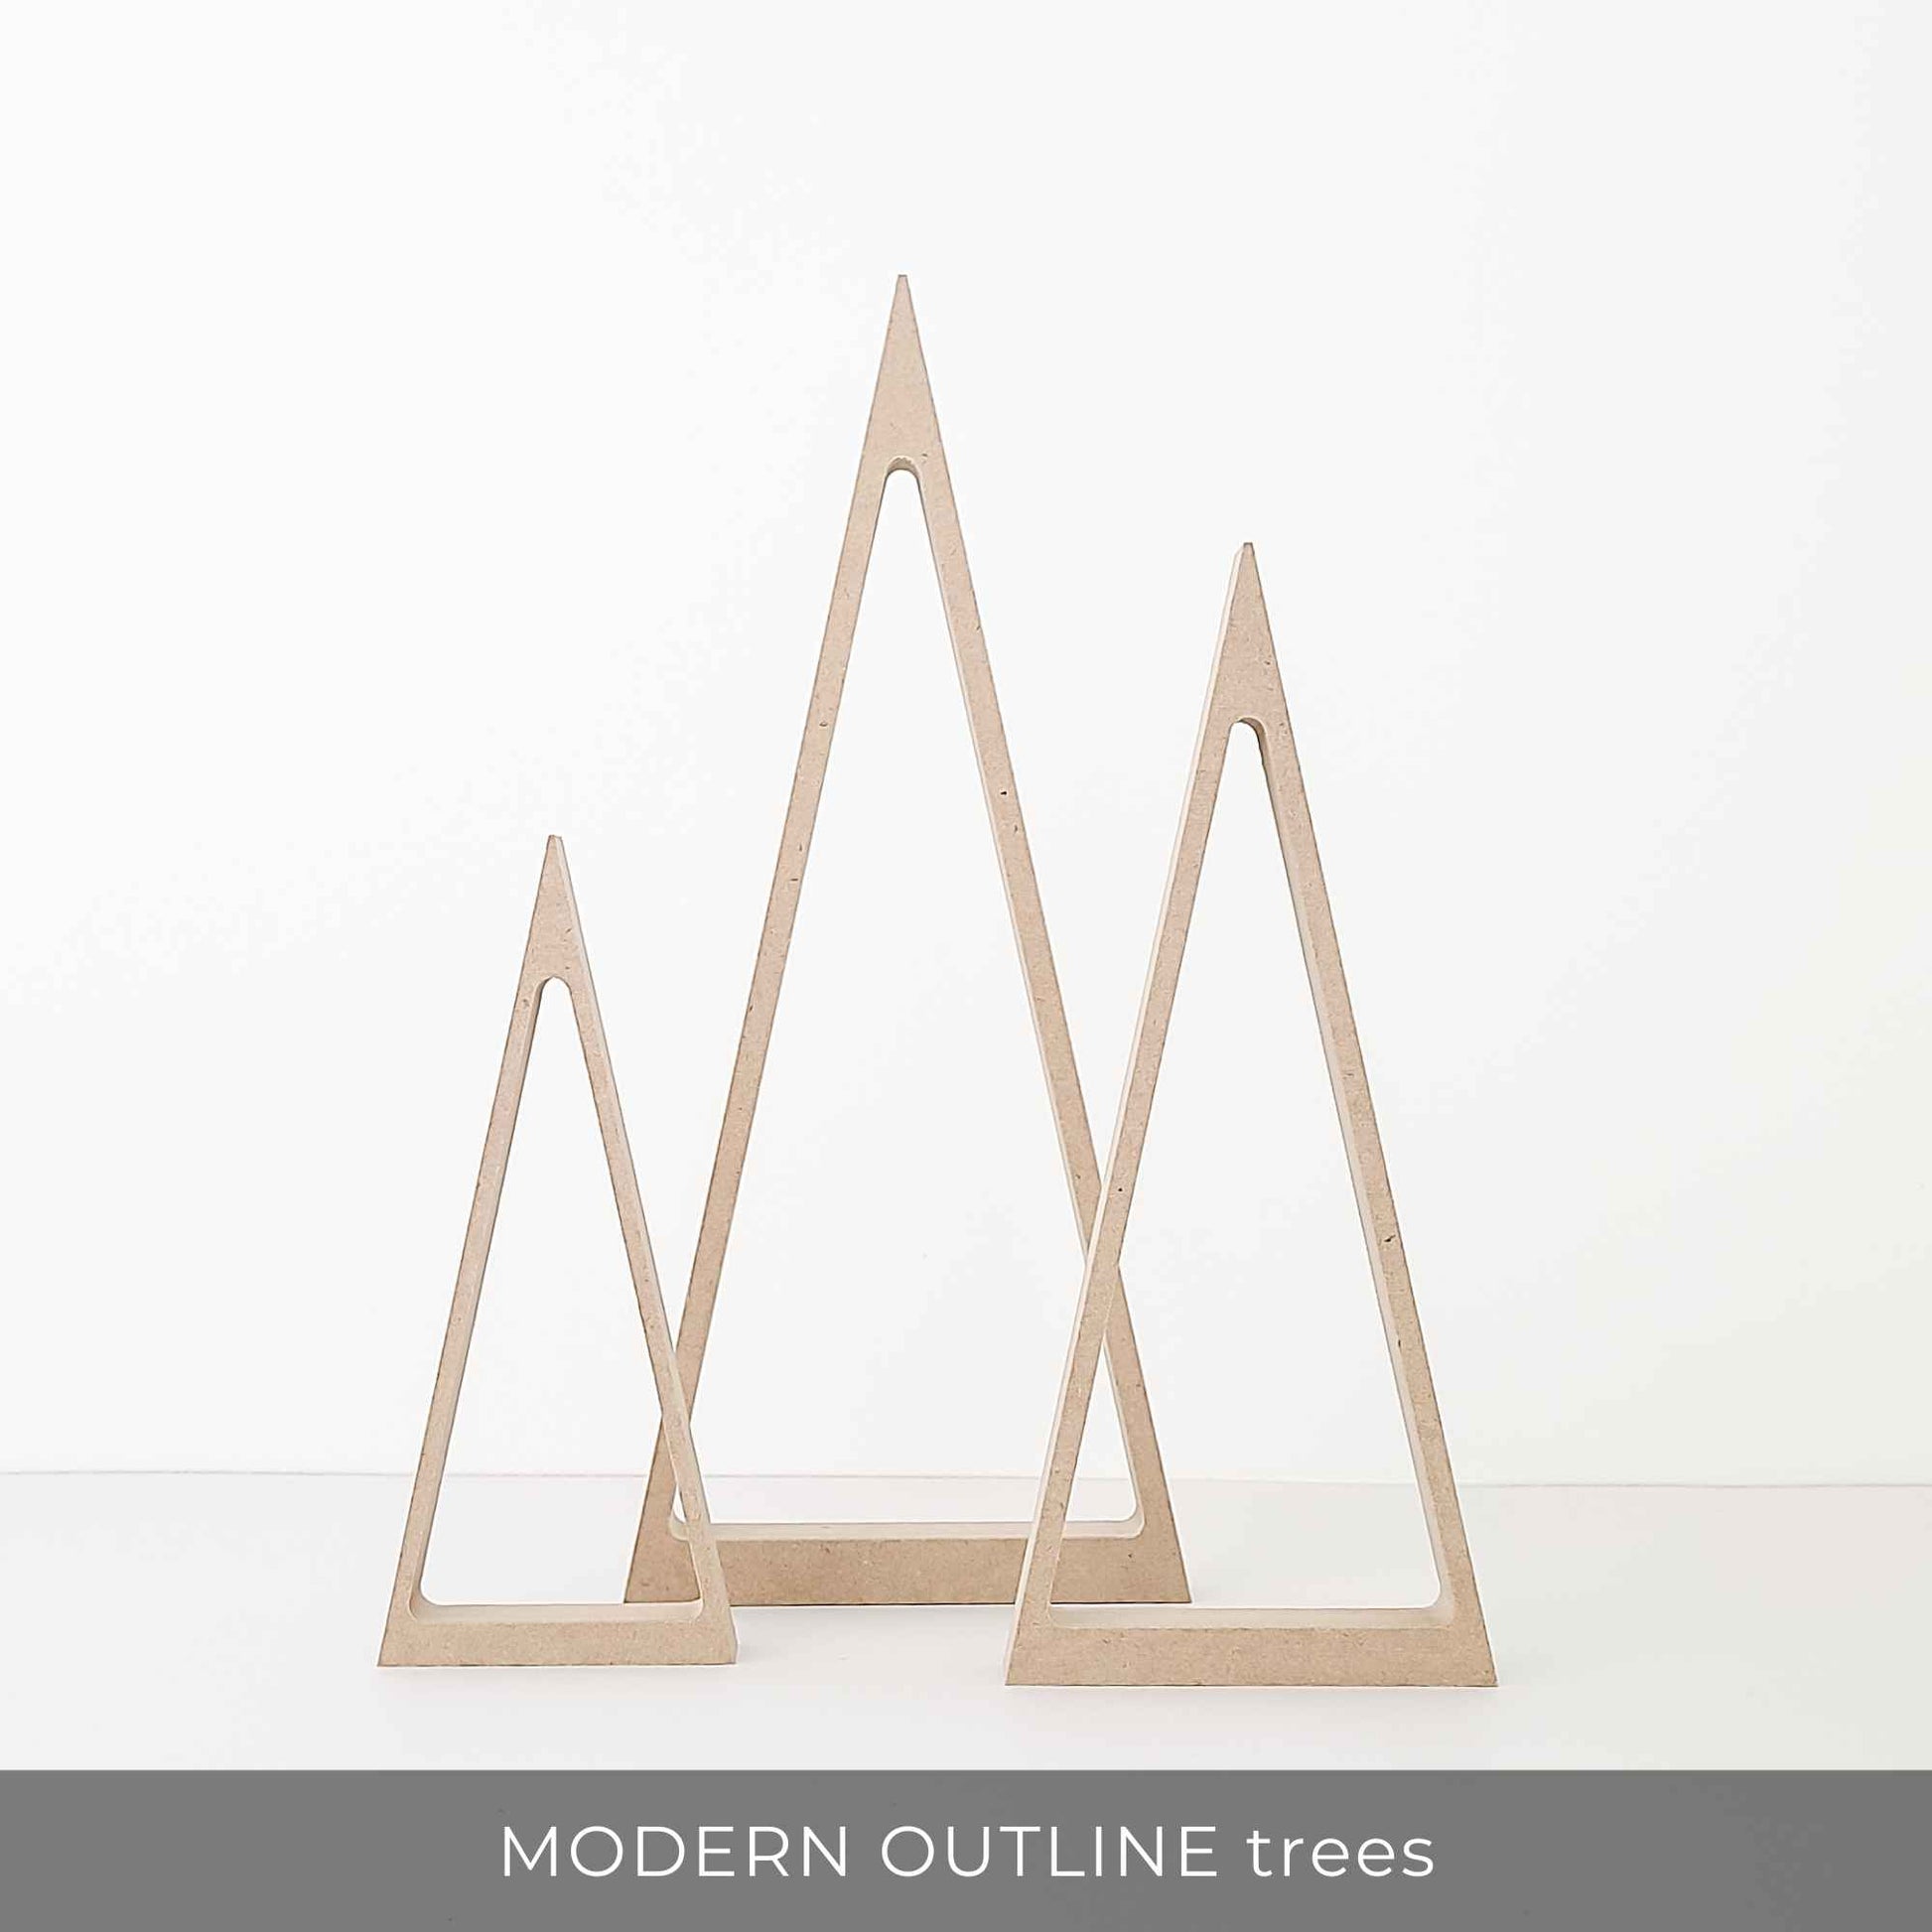 Modern outline wooden trees for Christmas decor or baby boy nursery decor